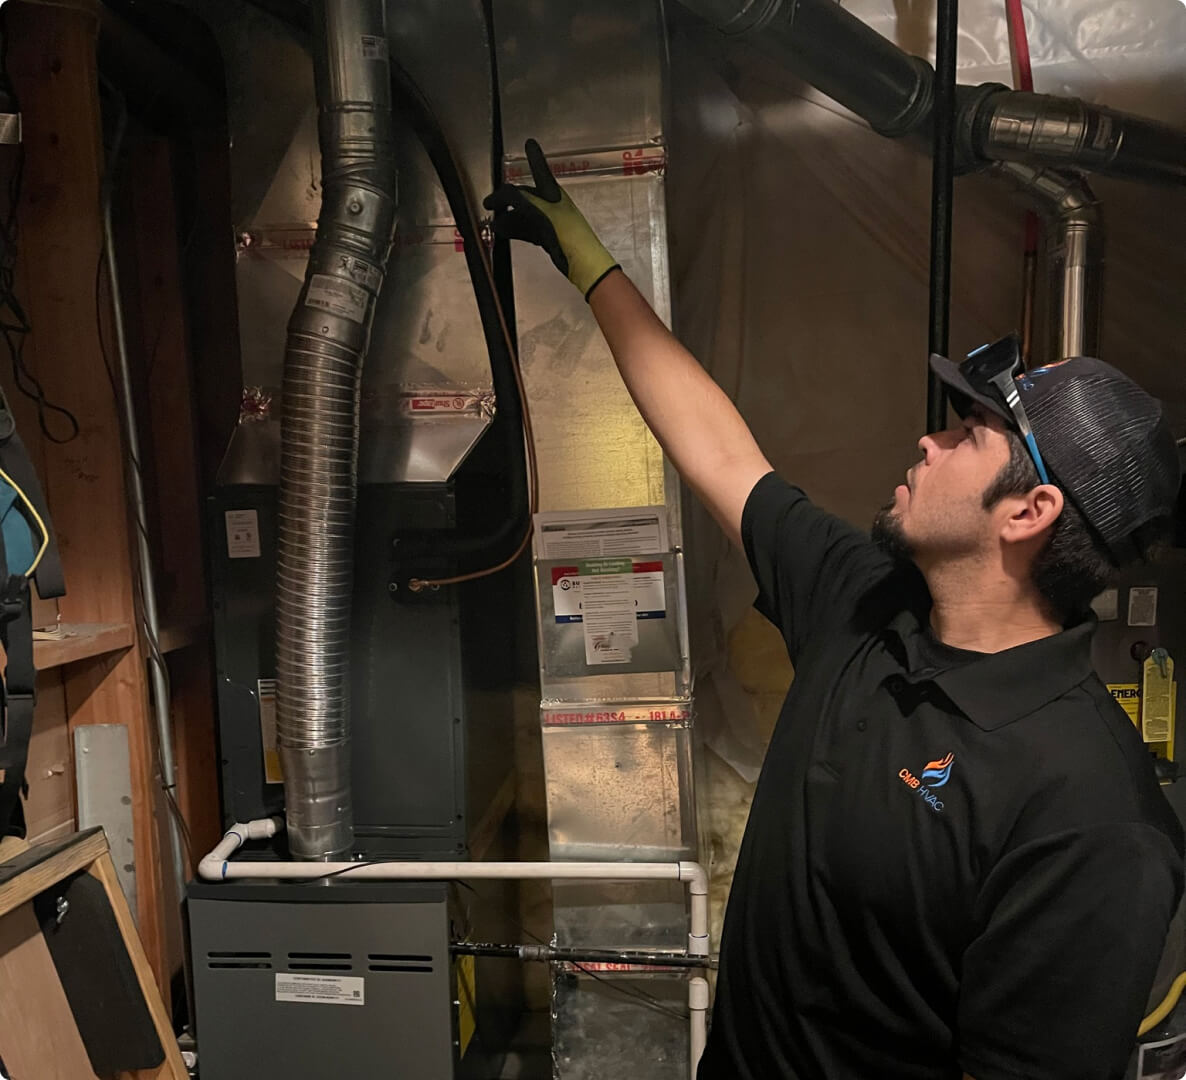 Technician inspecting HVAC system in a basement.